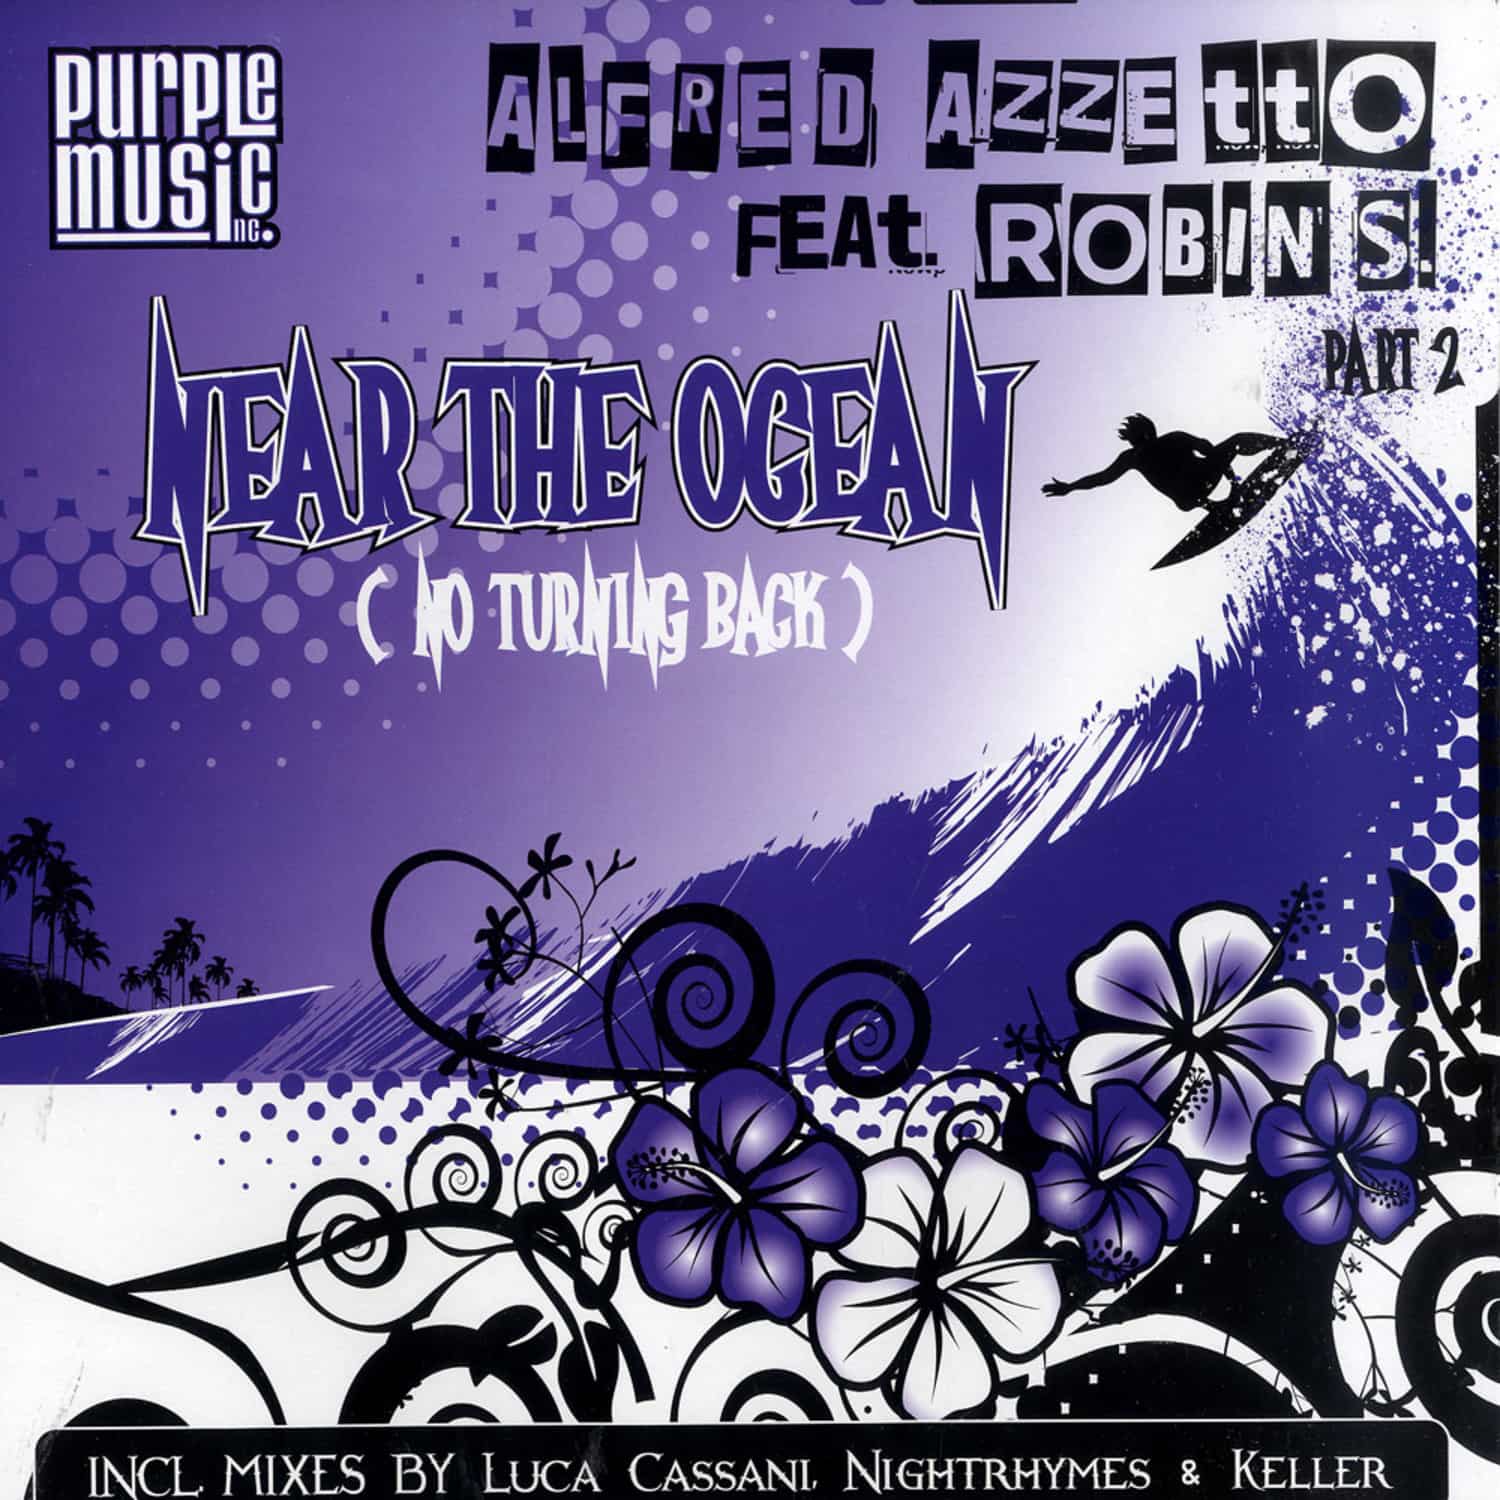 Alfred Azzeto feat. Robin S. - NEAR THE OCEAN 